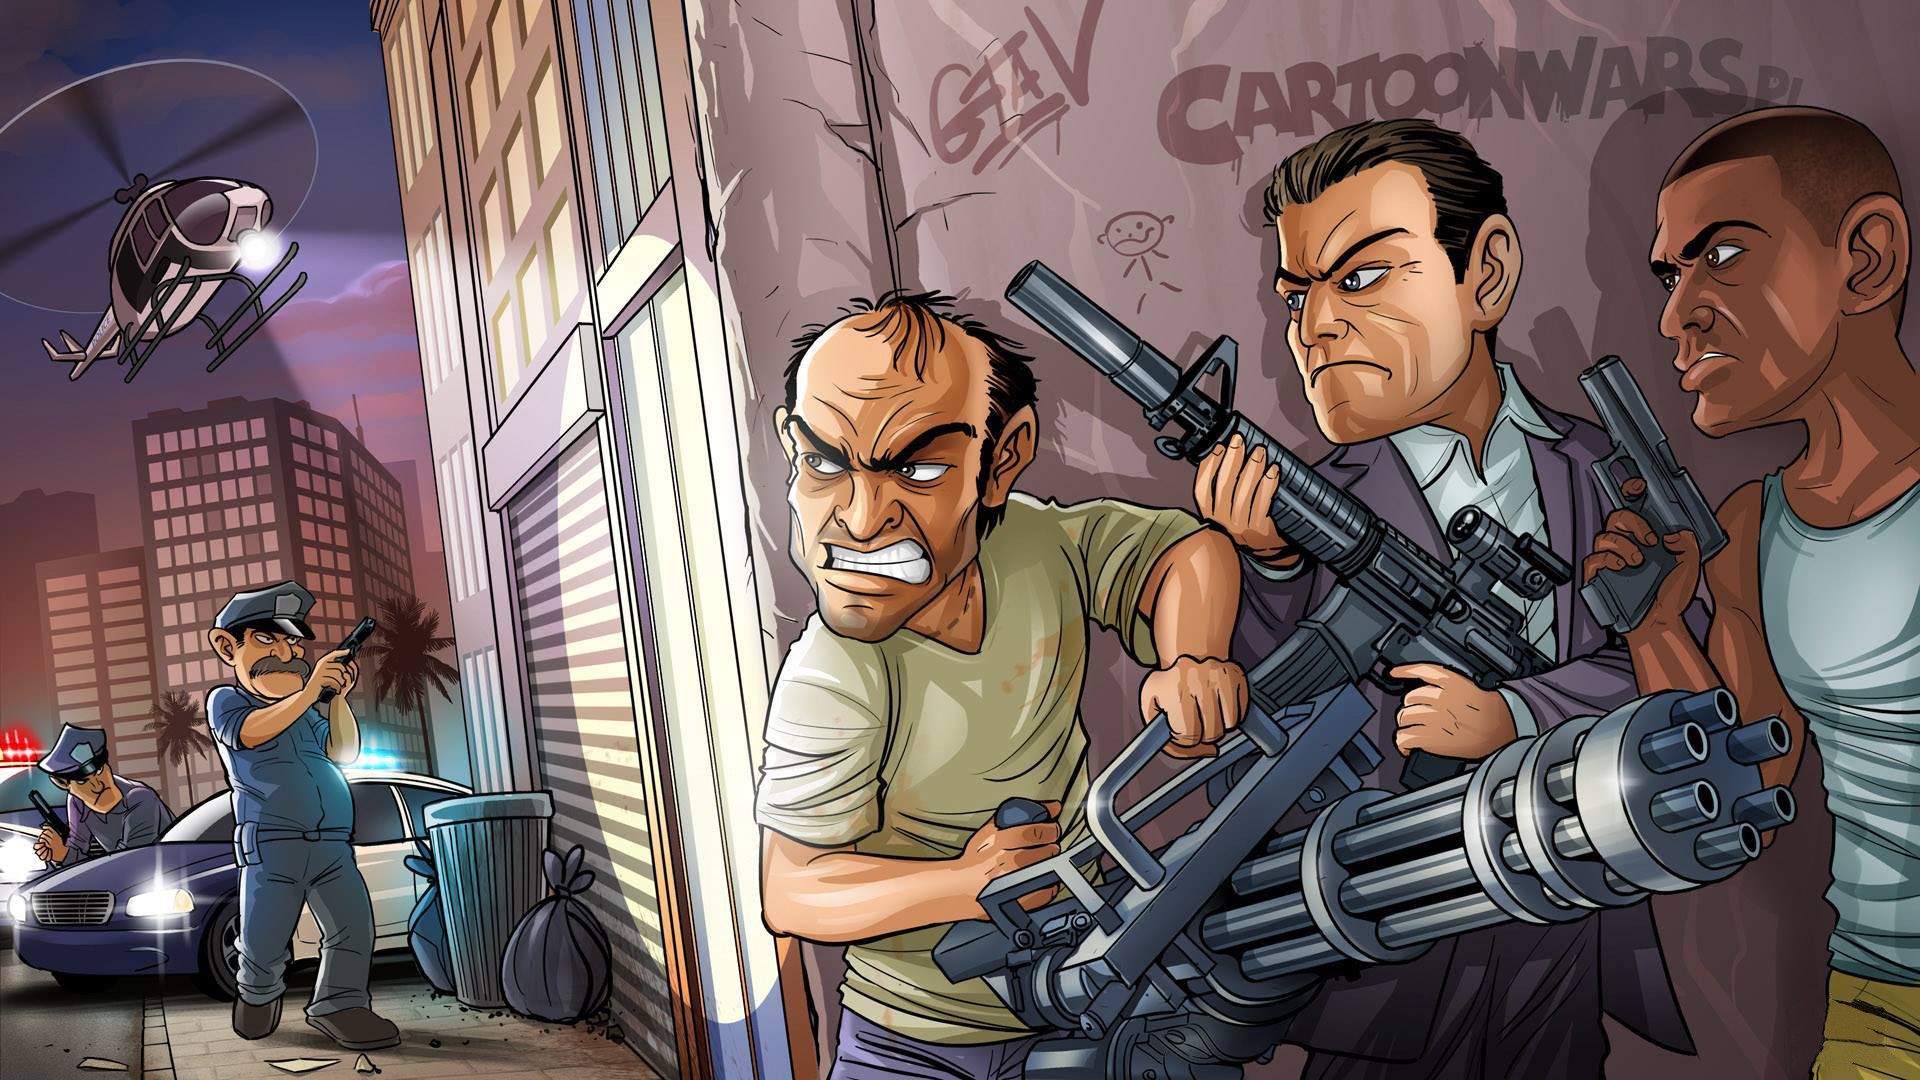 1080x1920px, free download, HD wallpaper: Grand Theft Auto V, Grand Theft  Auto V Online, Rockstar Games